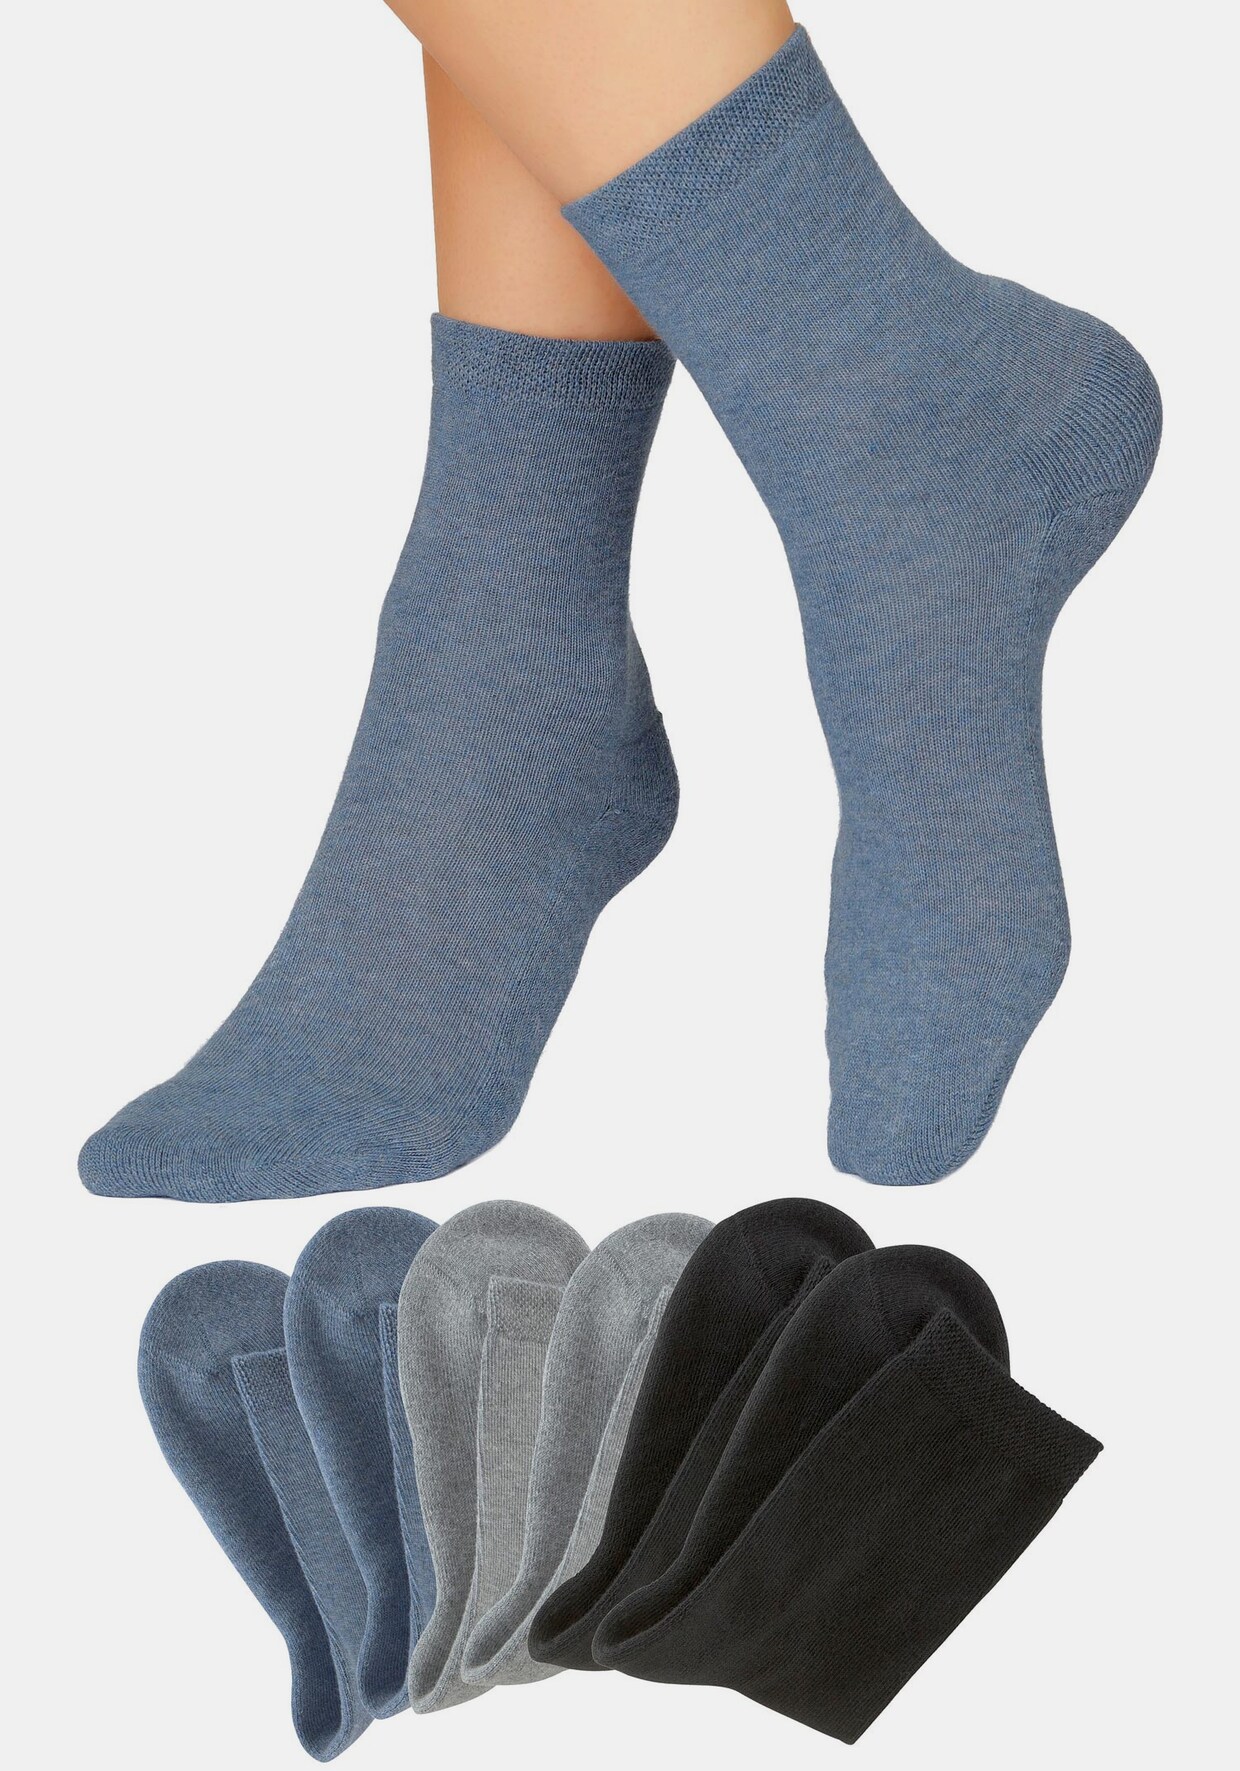 H.I.S Socken - 2x schwarz + 2x jeans-melange + 2x grau-melange